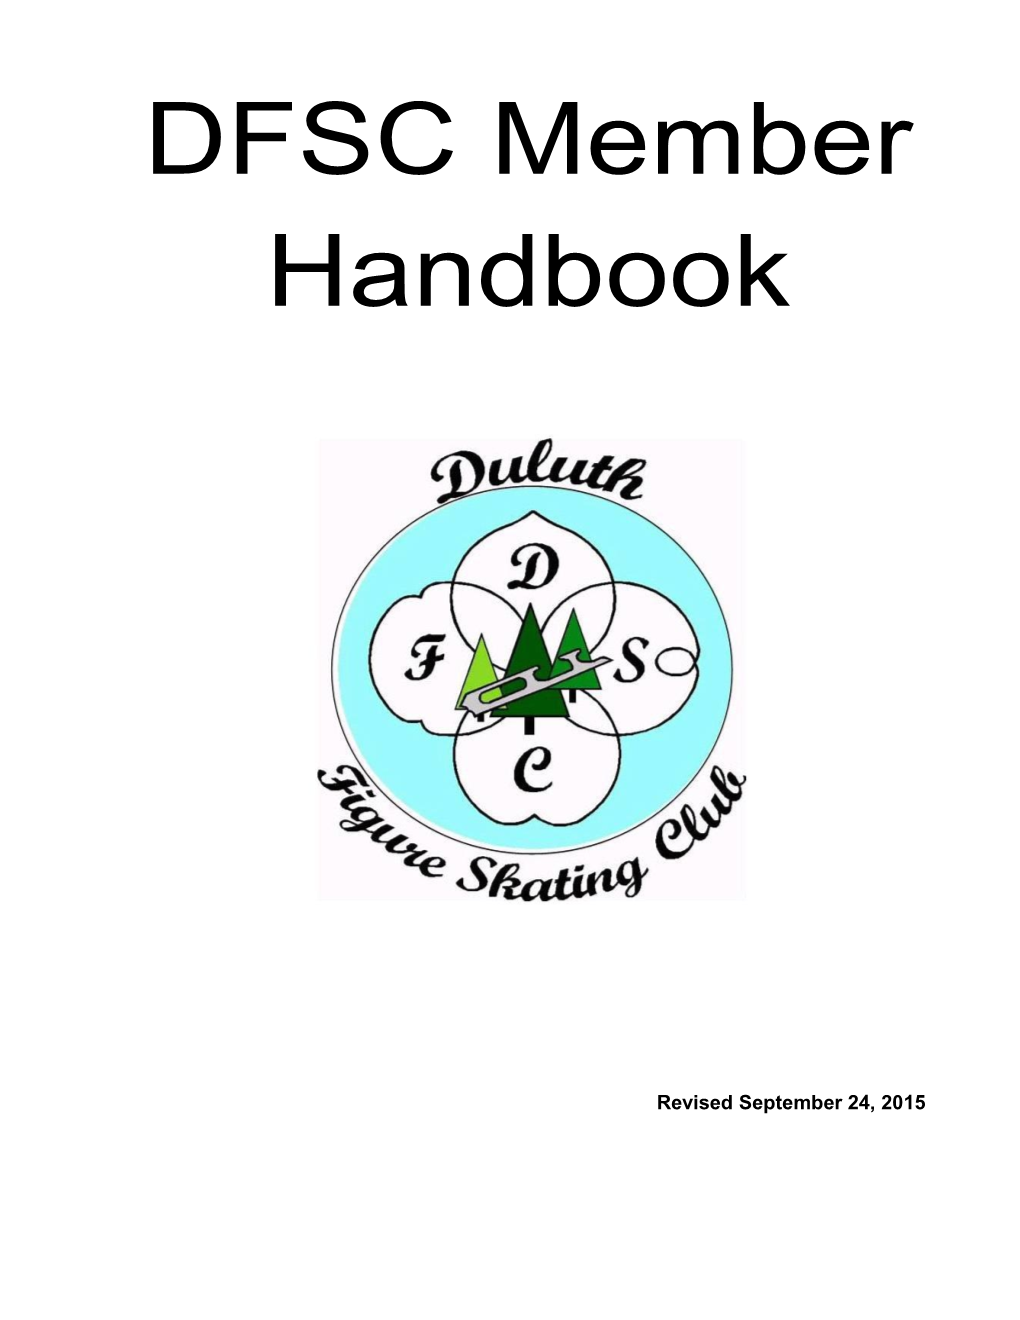 DFSC Member Handbook